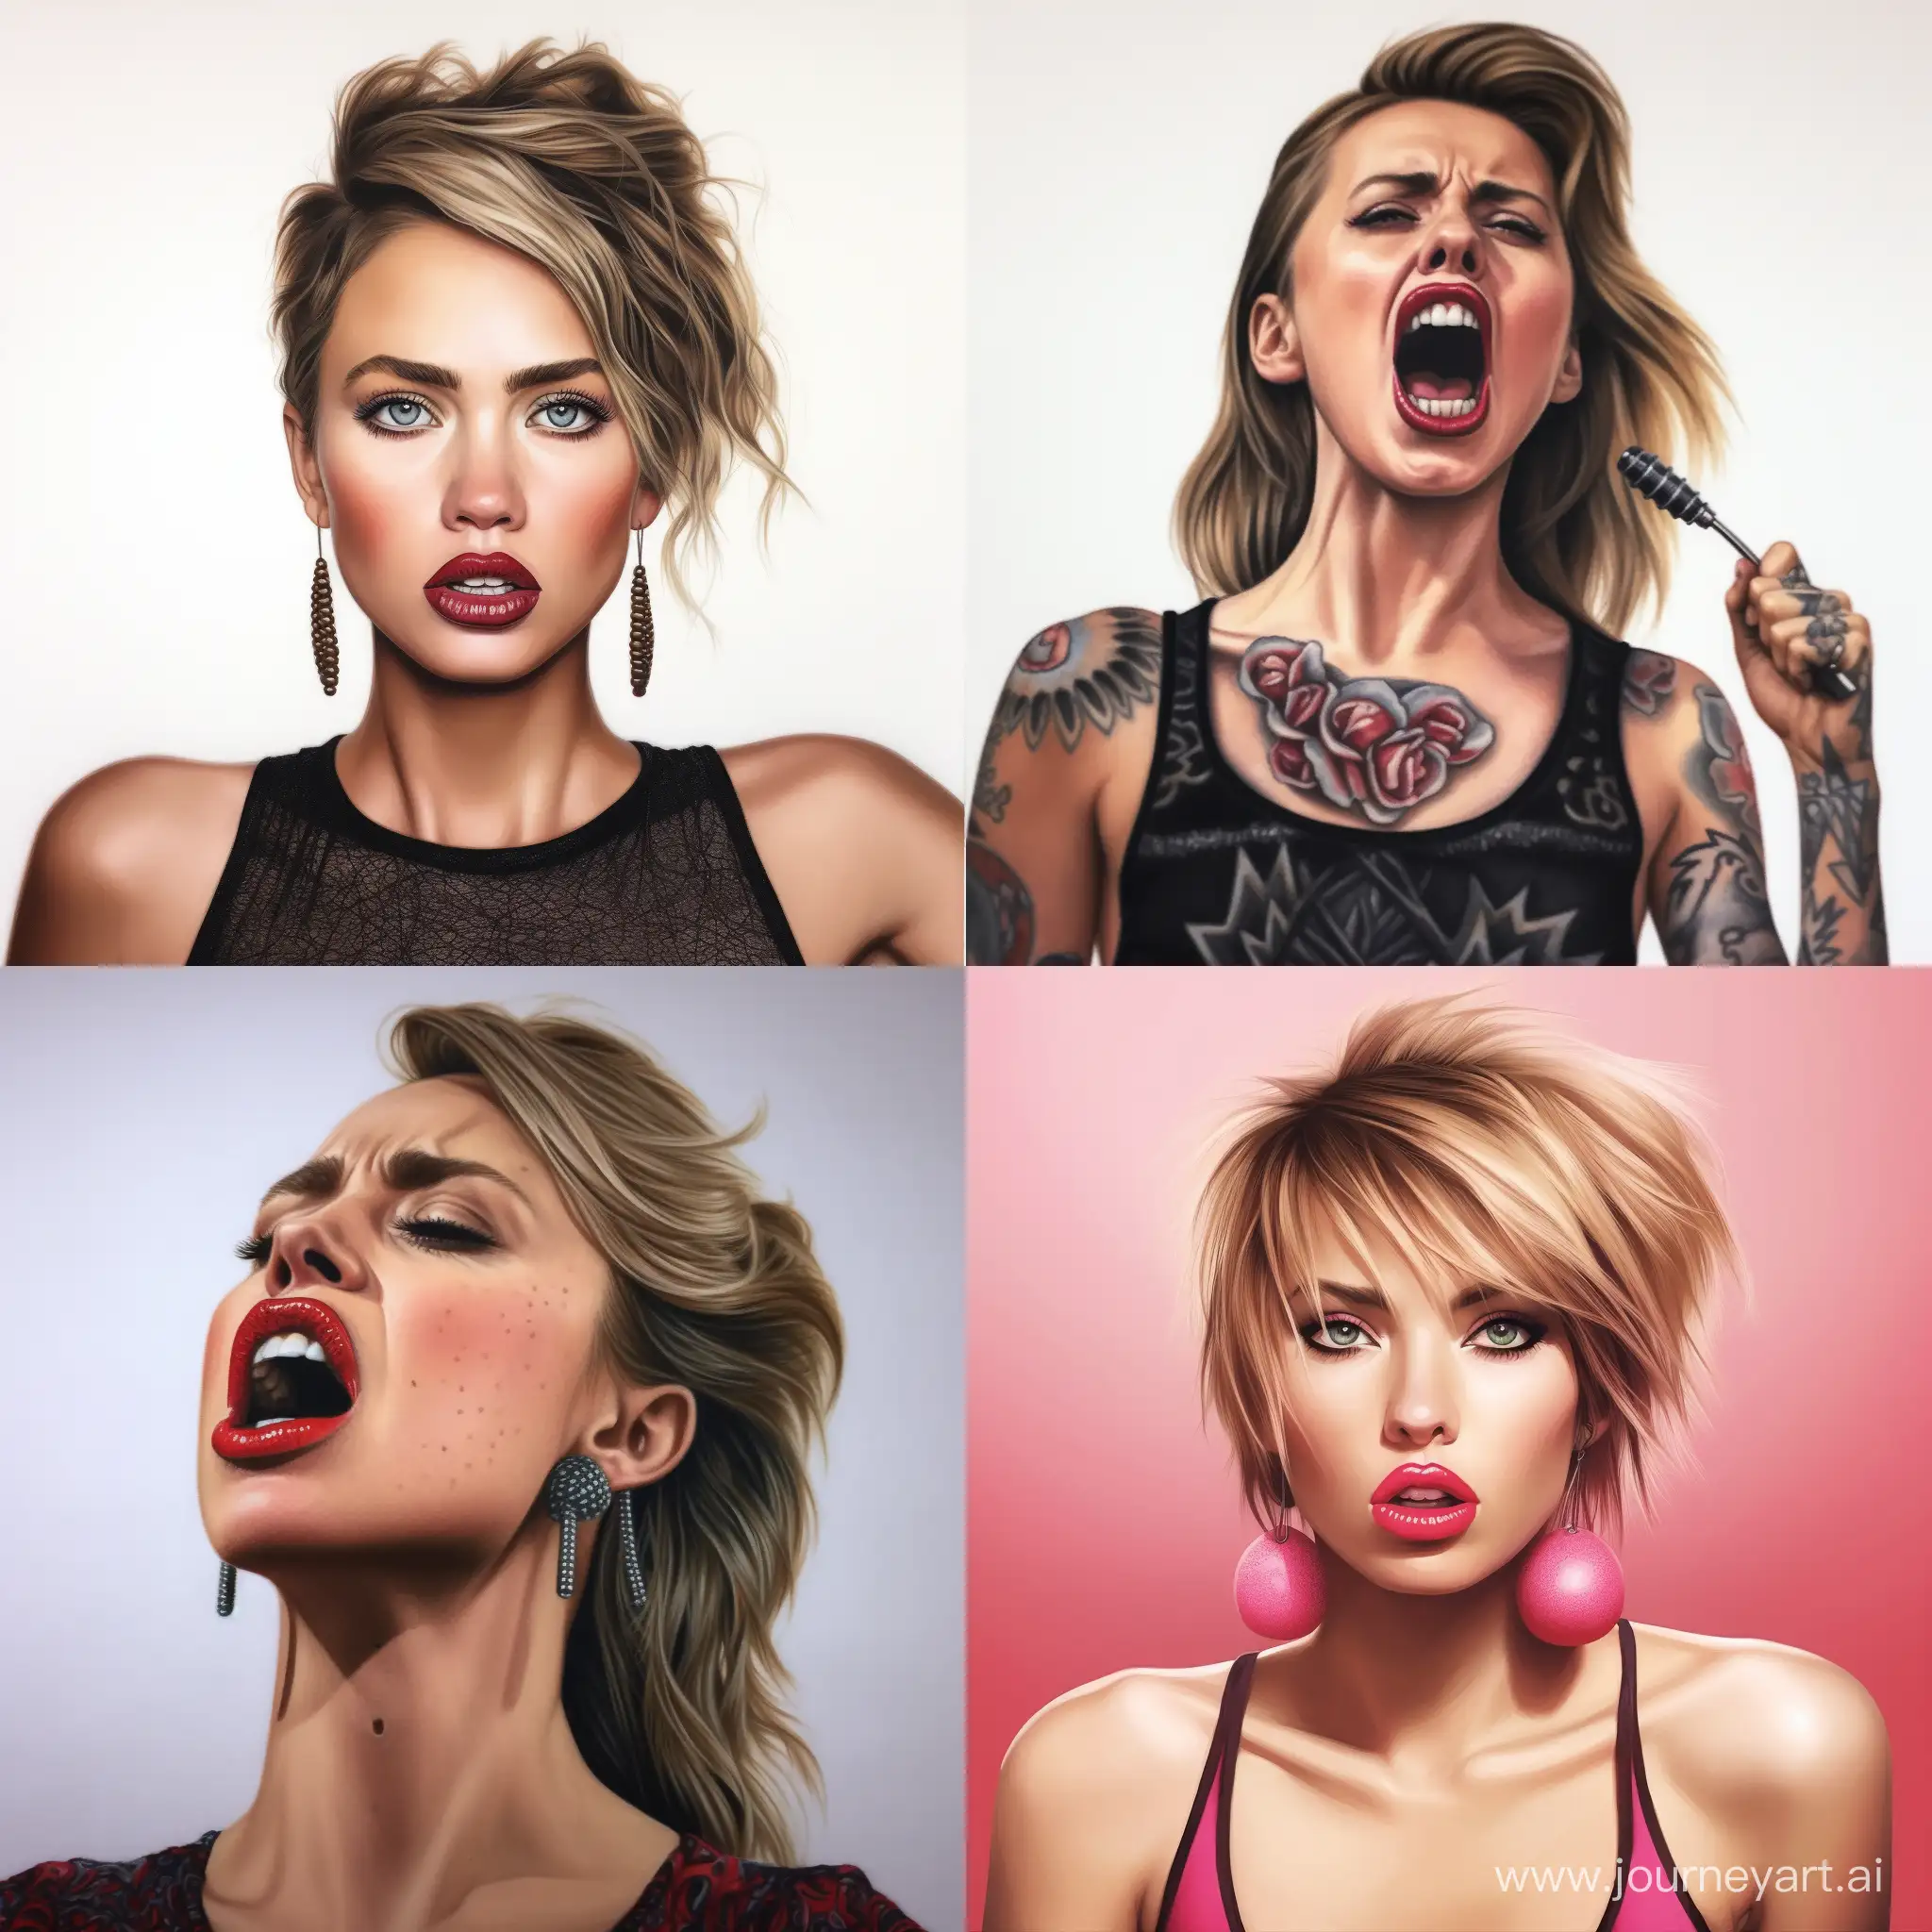 Miley-Cyrus-Portrait-in-Aspect-Ratio-11